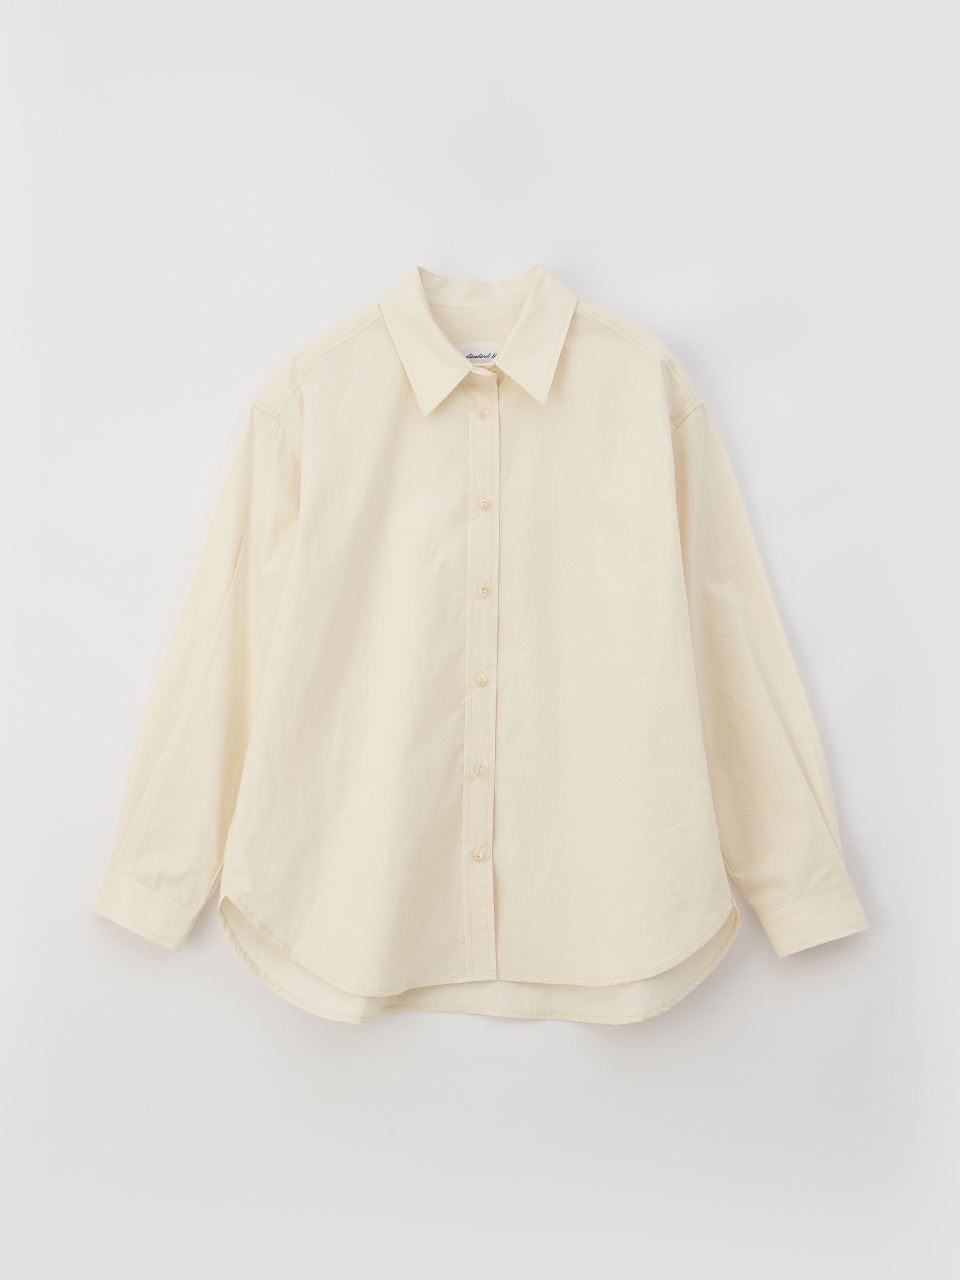 standard overfit shirts - light beigeBRENDA BRENDEN